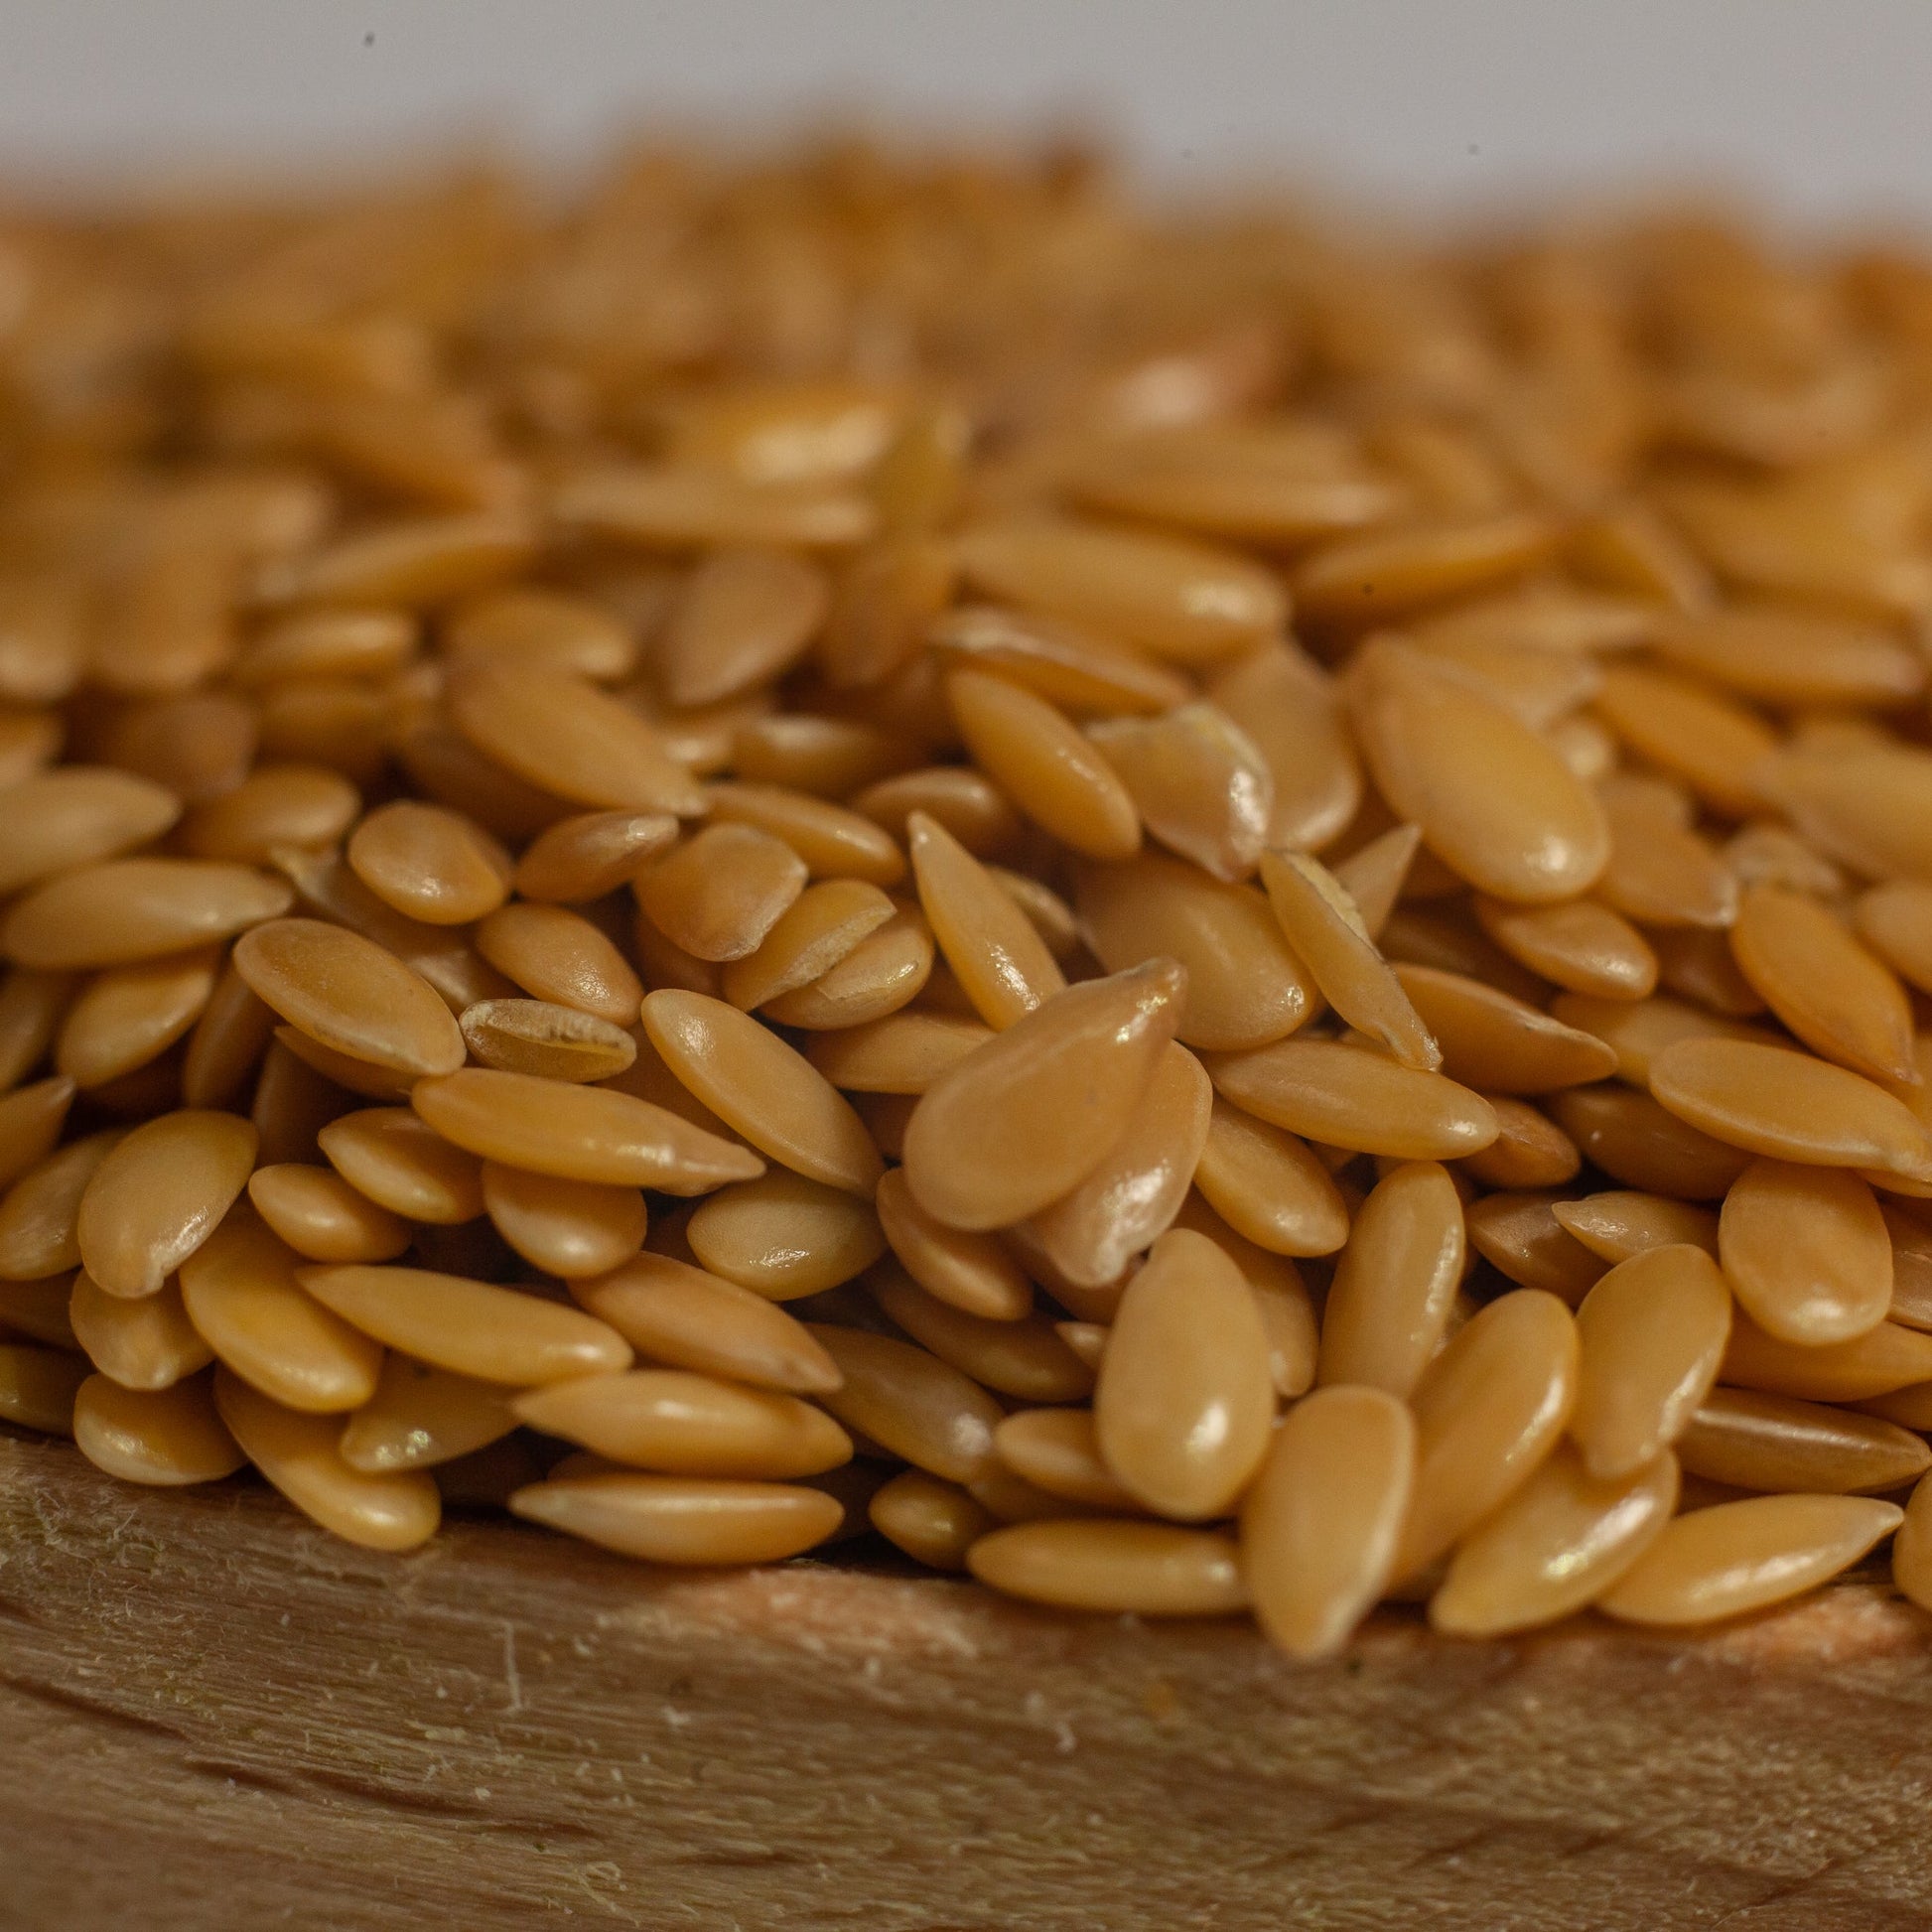 Organic Golden Flax Seeds close up